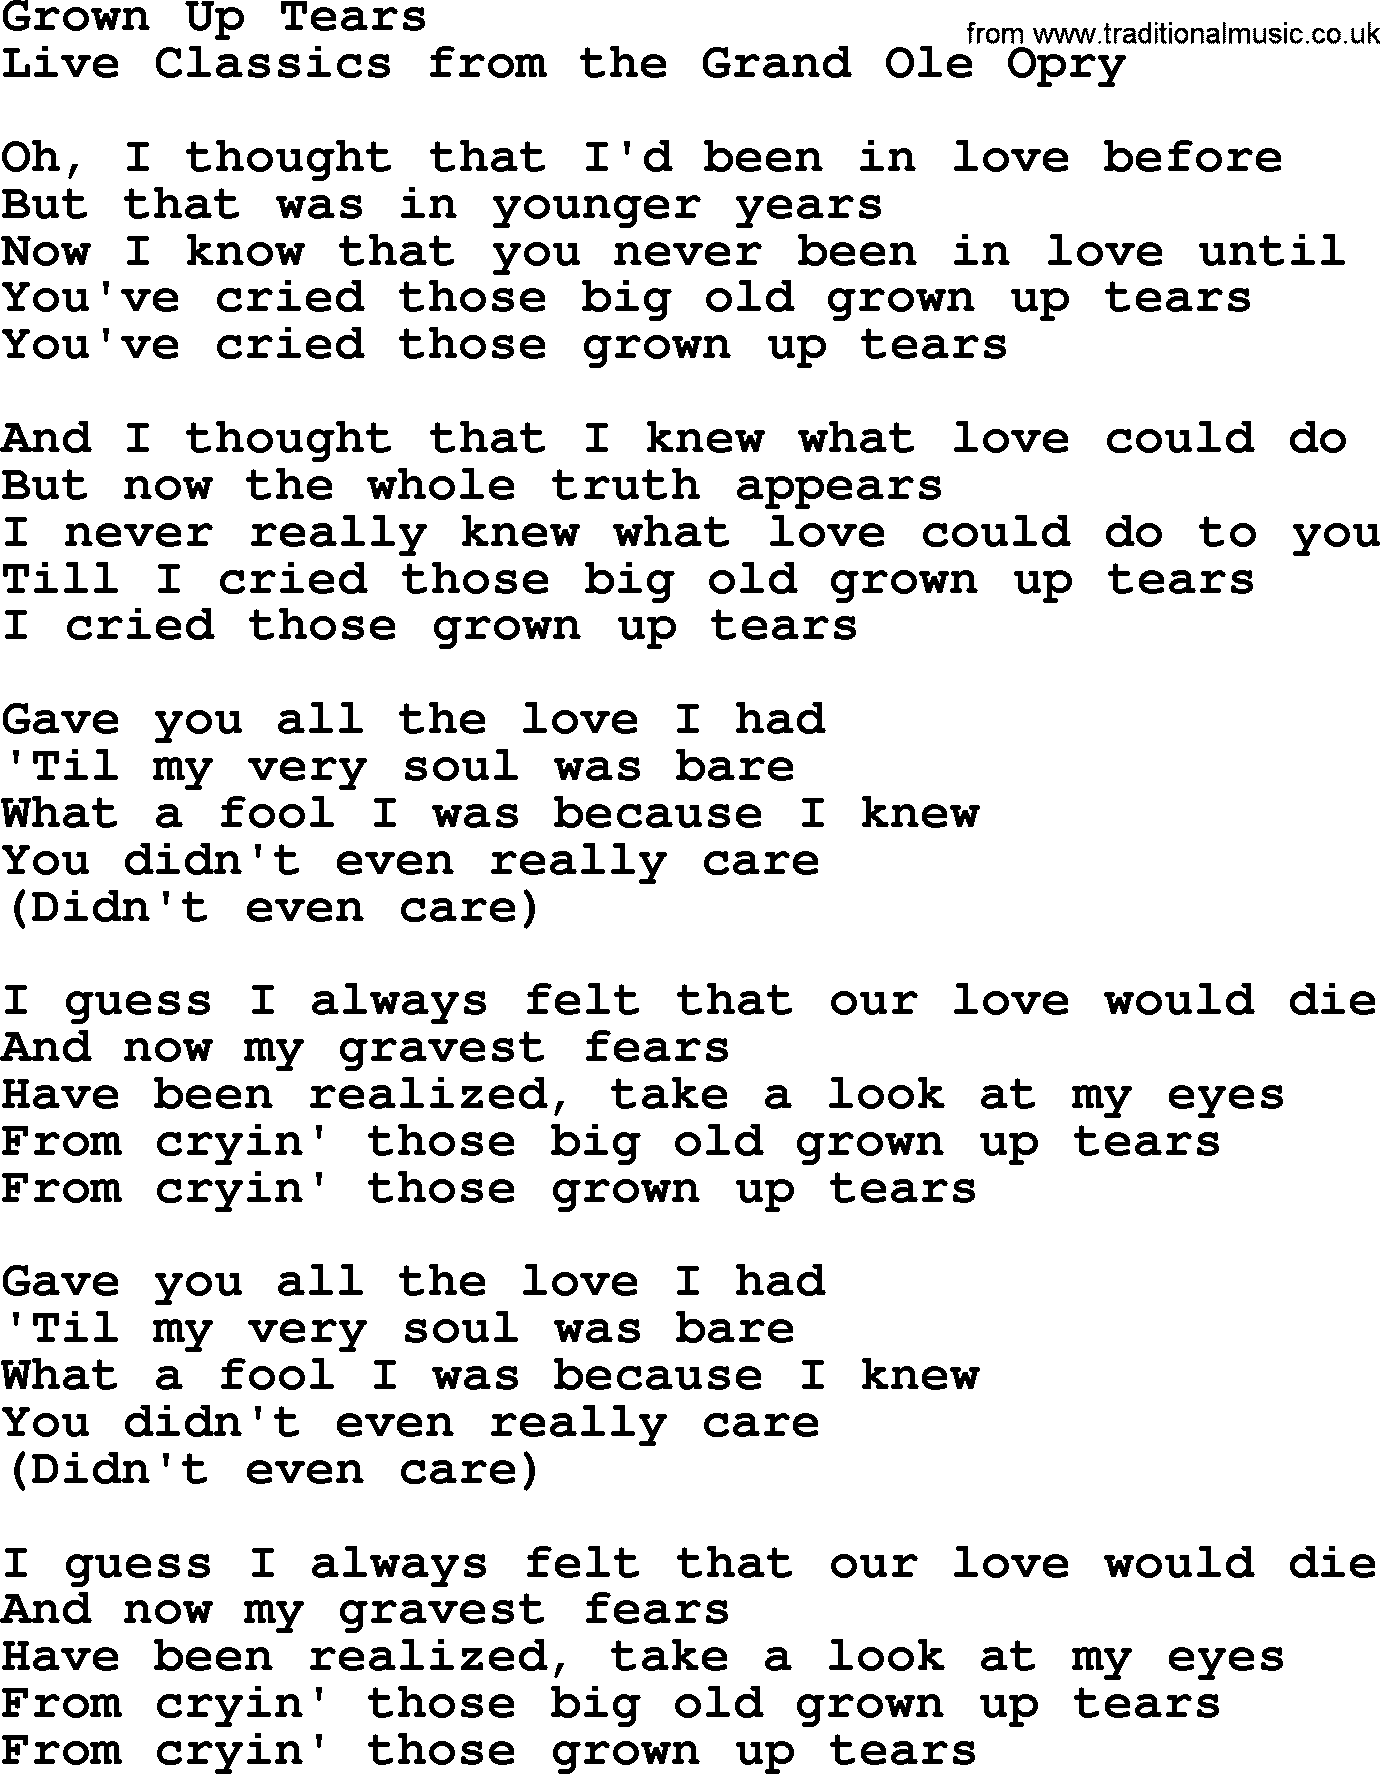 Marty Robbins song: Grown Up Tears, lyrics